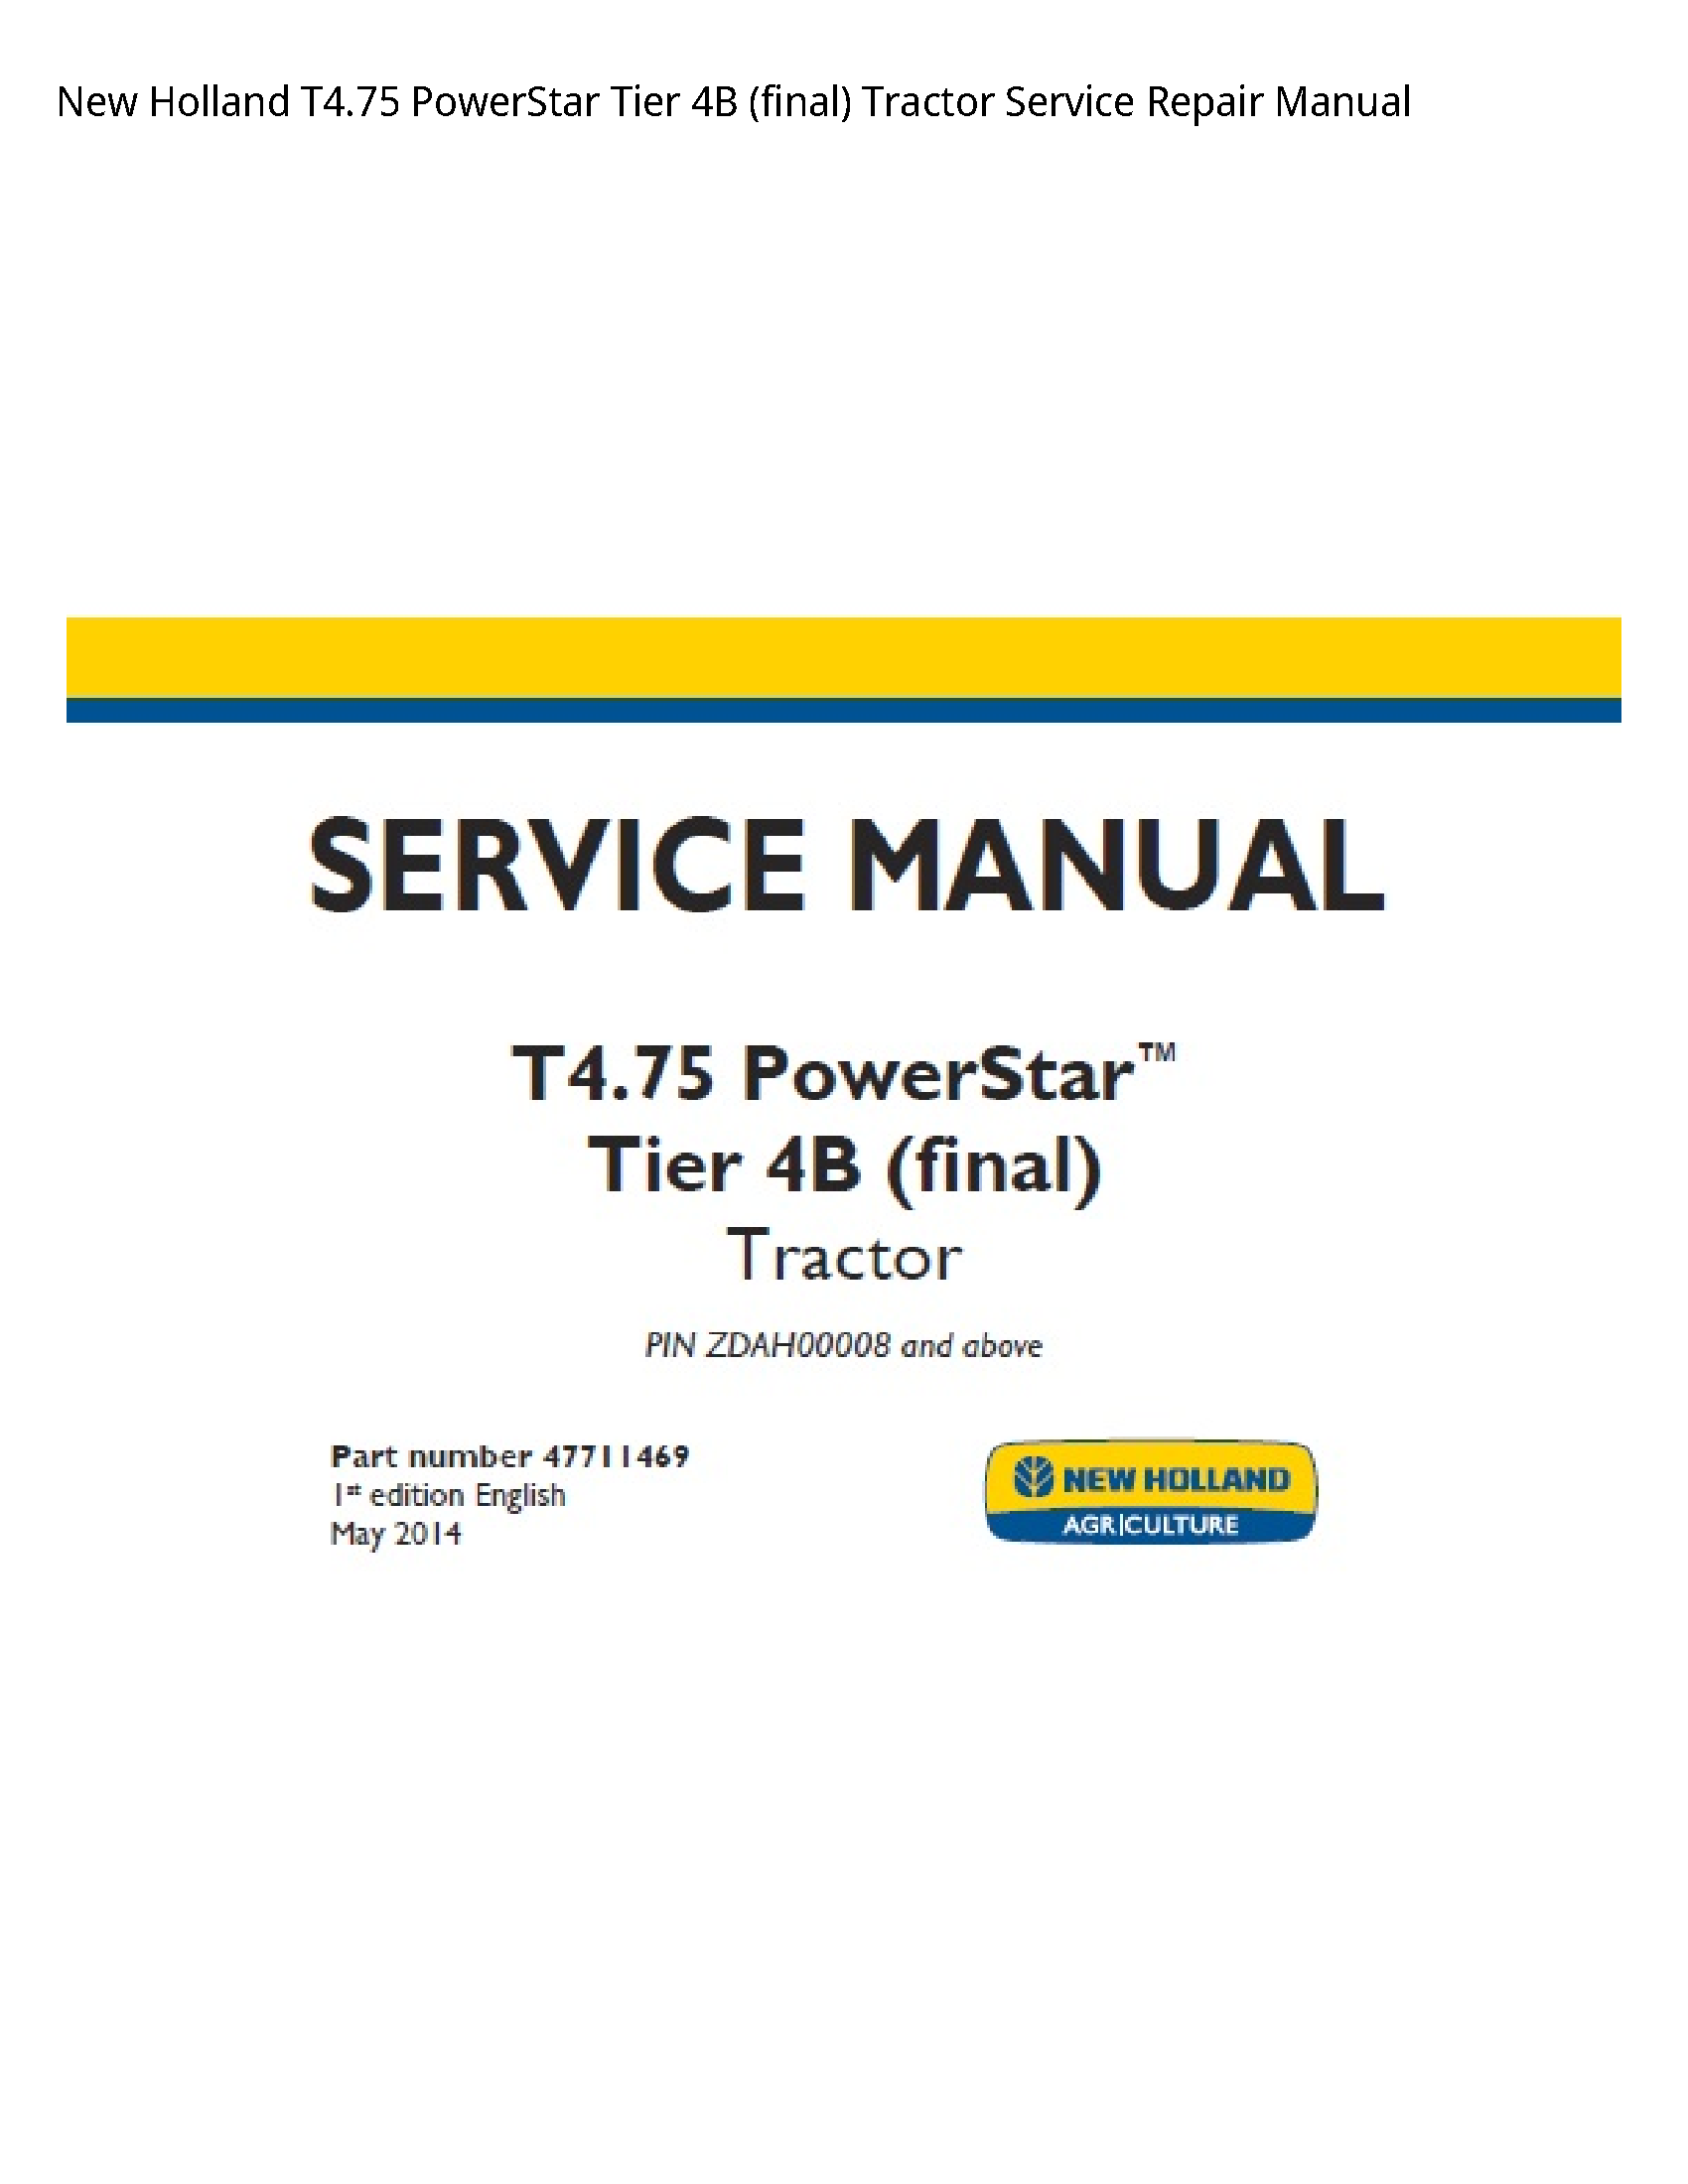 New Holland T4.75 PowerStar Tier (final) Tractor manual